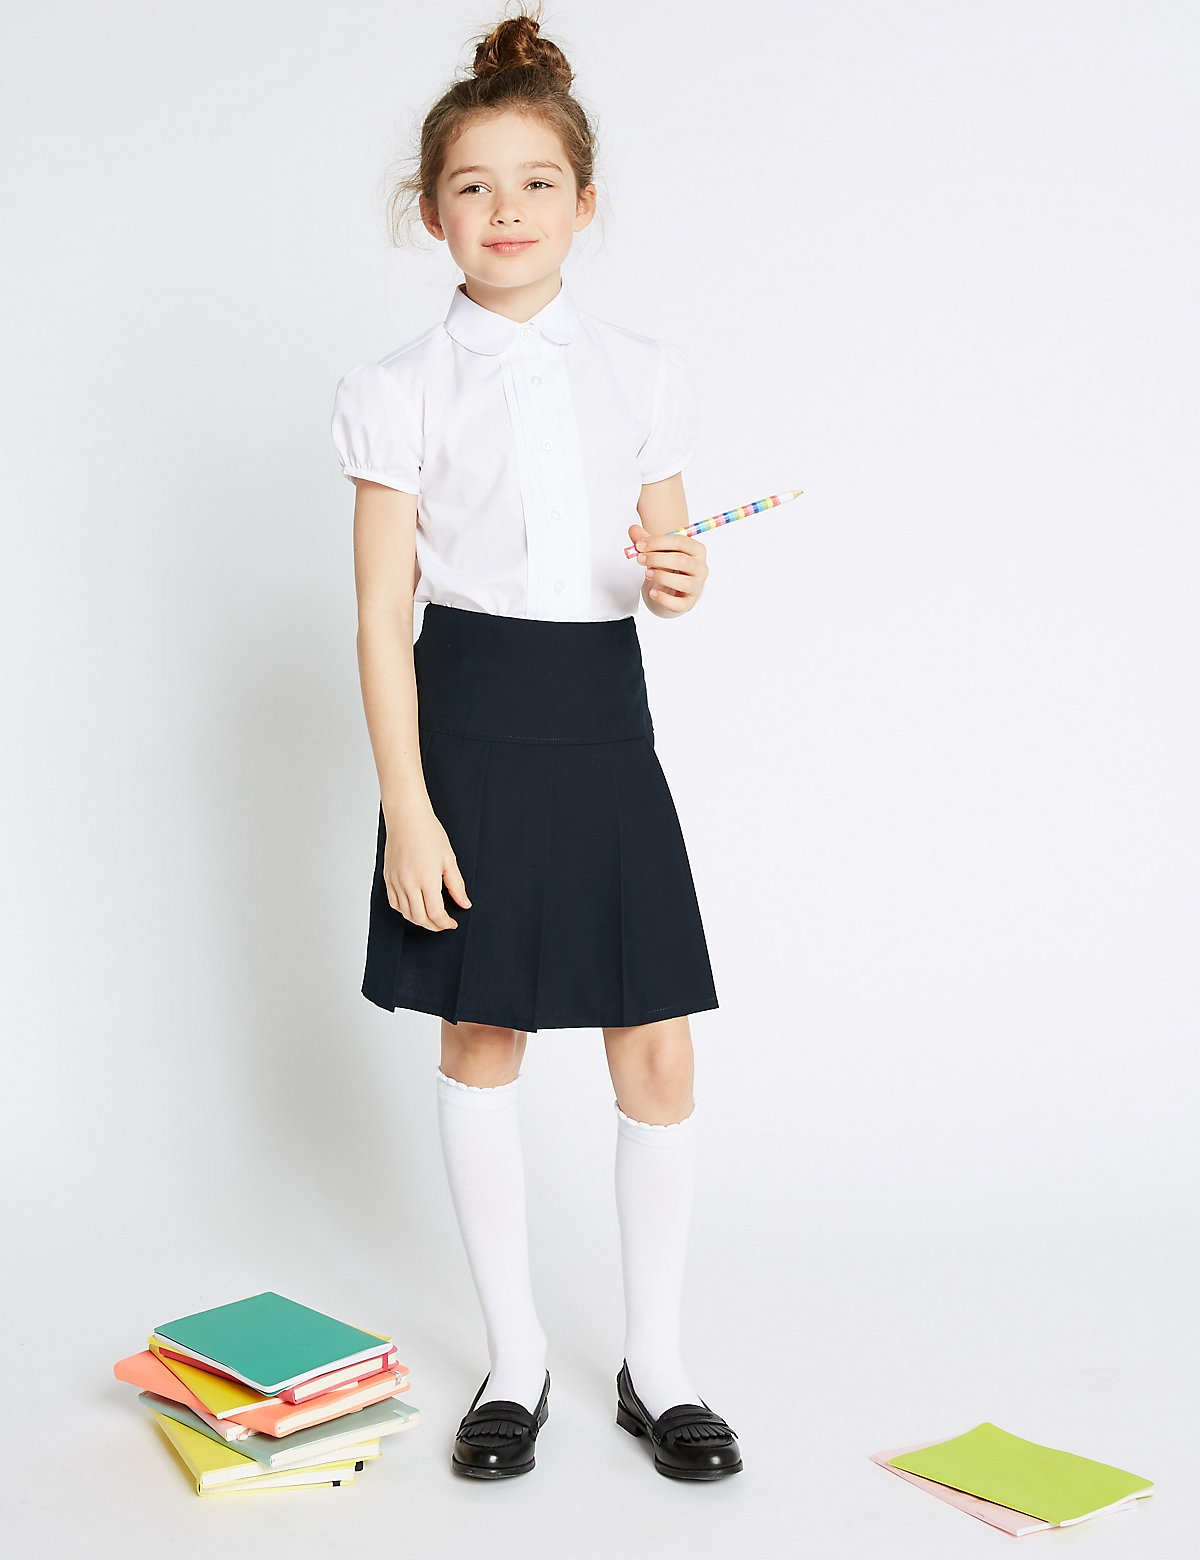 M & S Uniforms – School & Corporate Uniforms